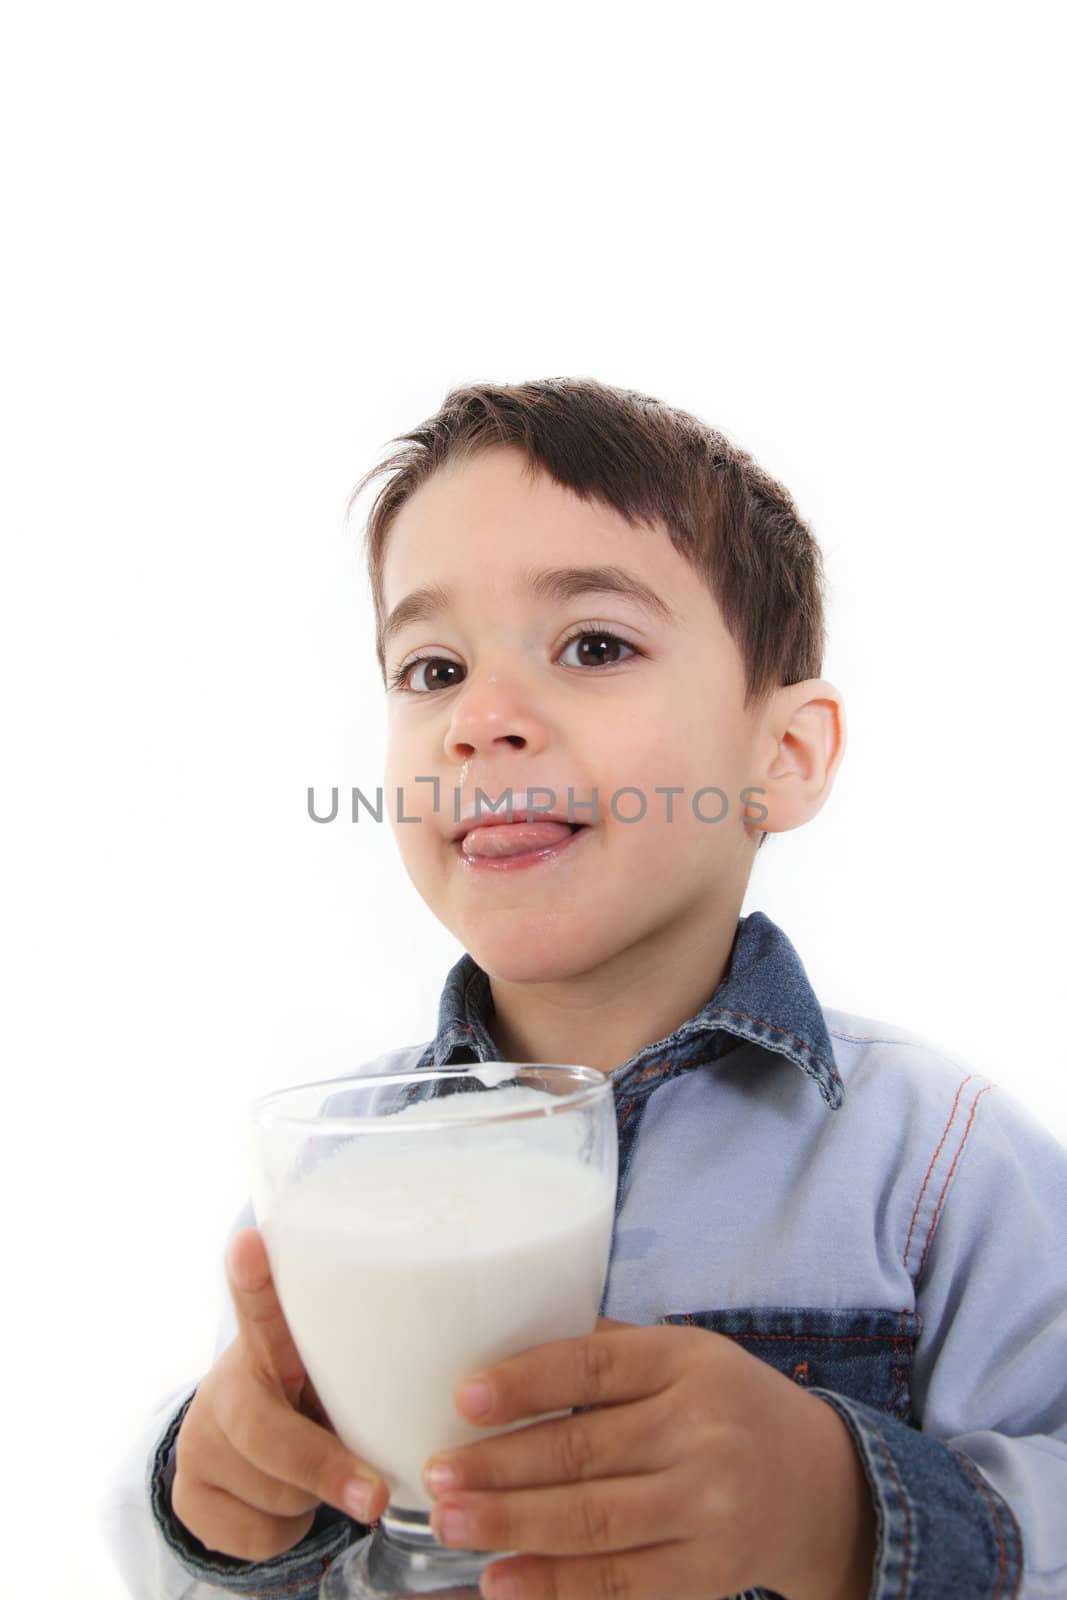 Handsome child drinking a glass of milk